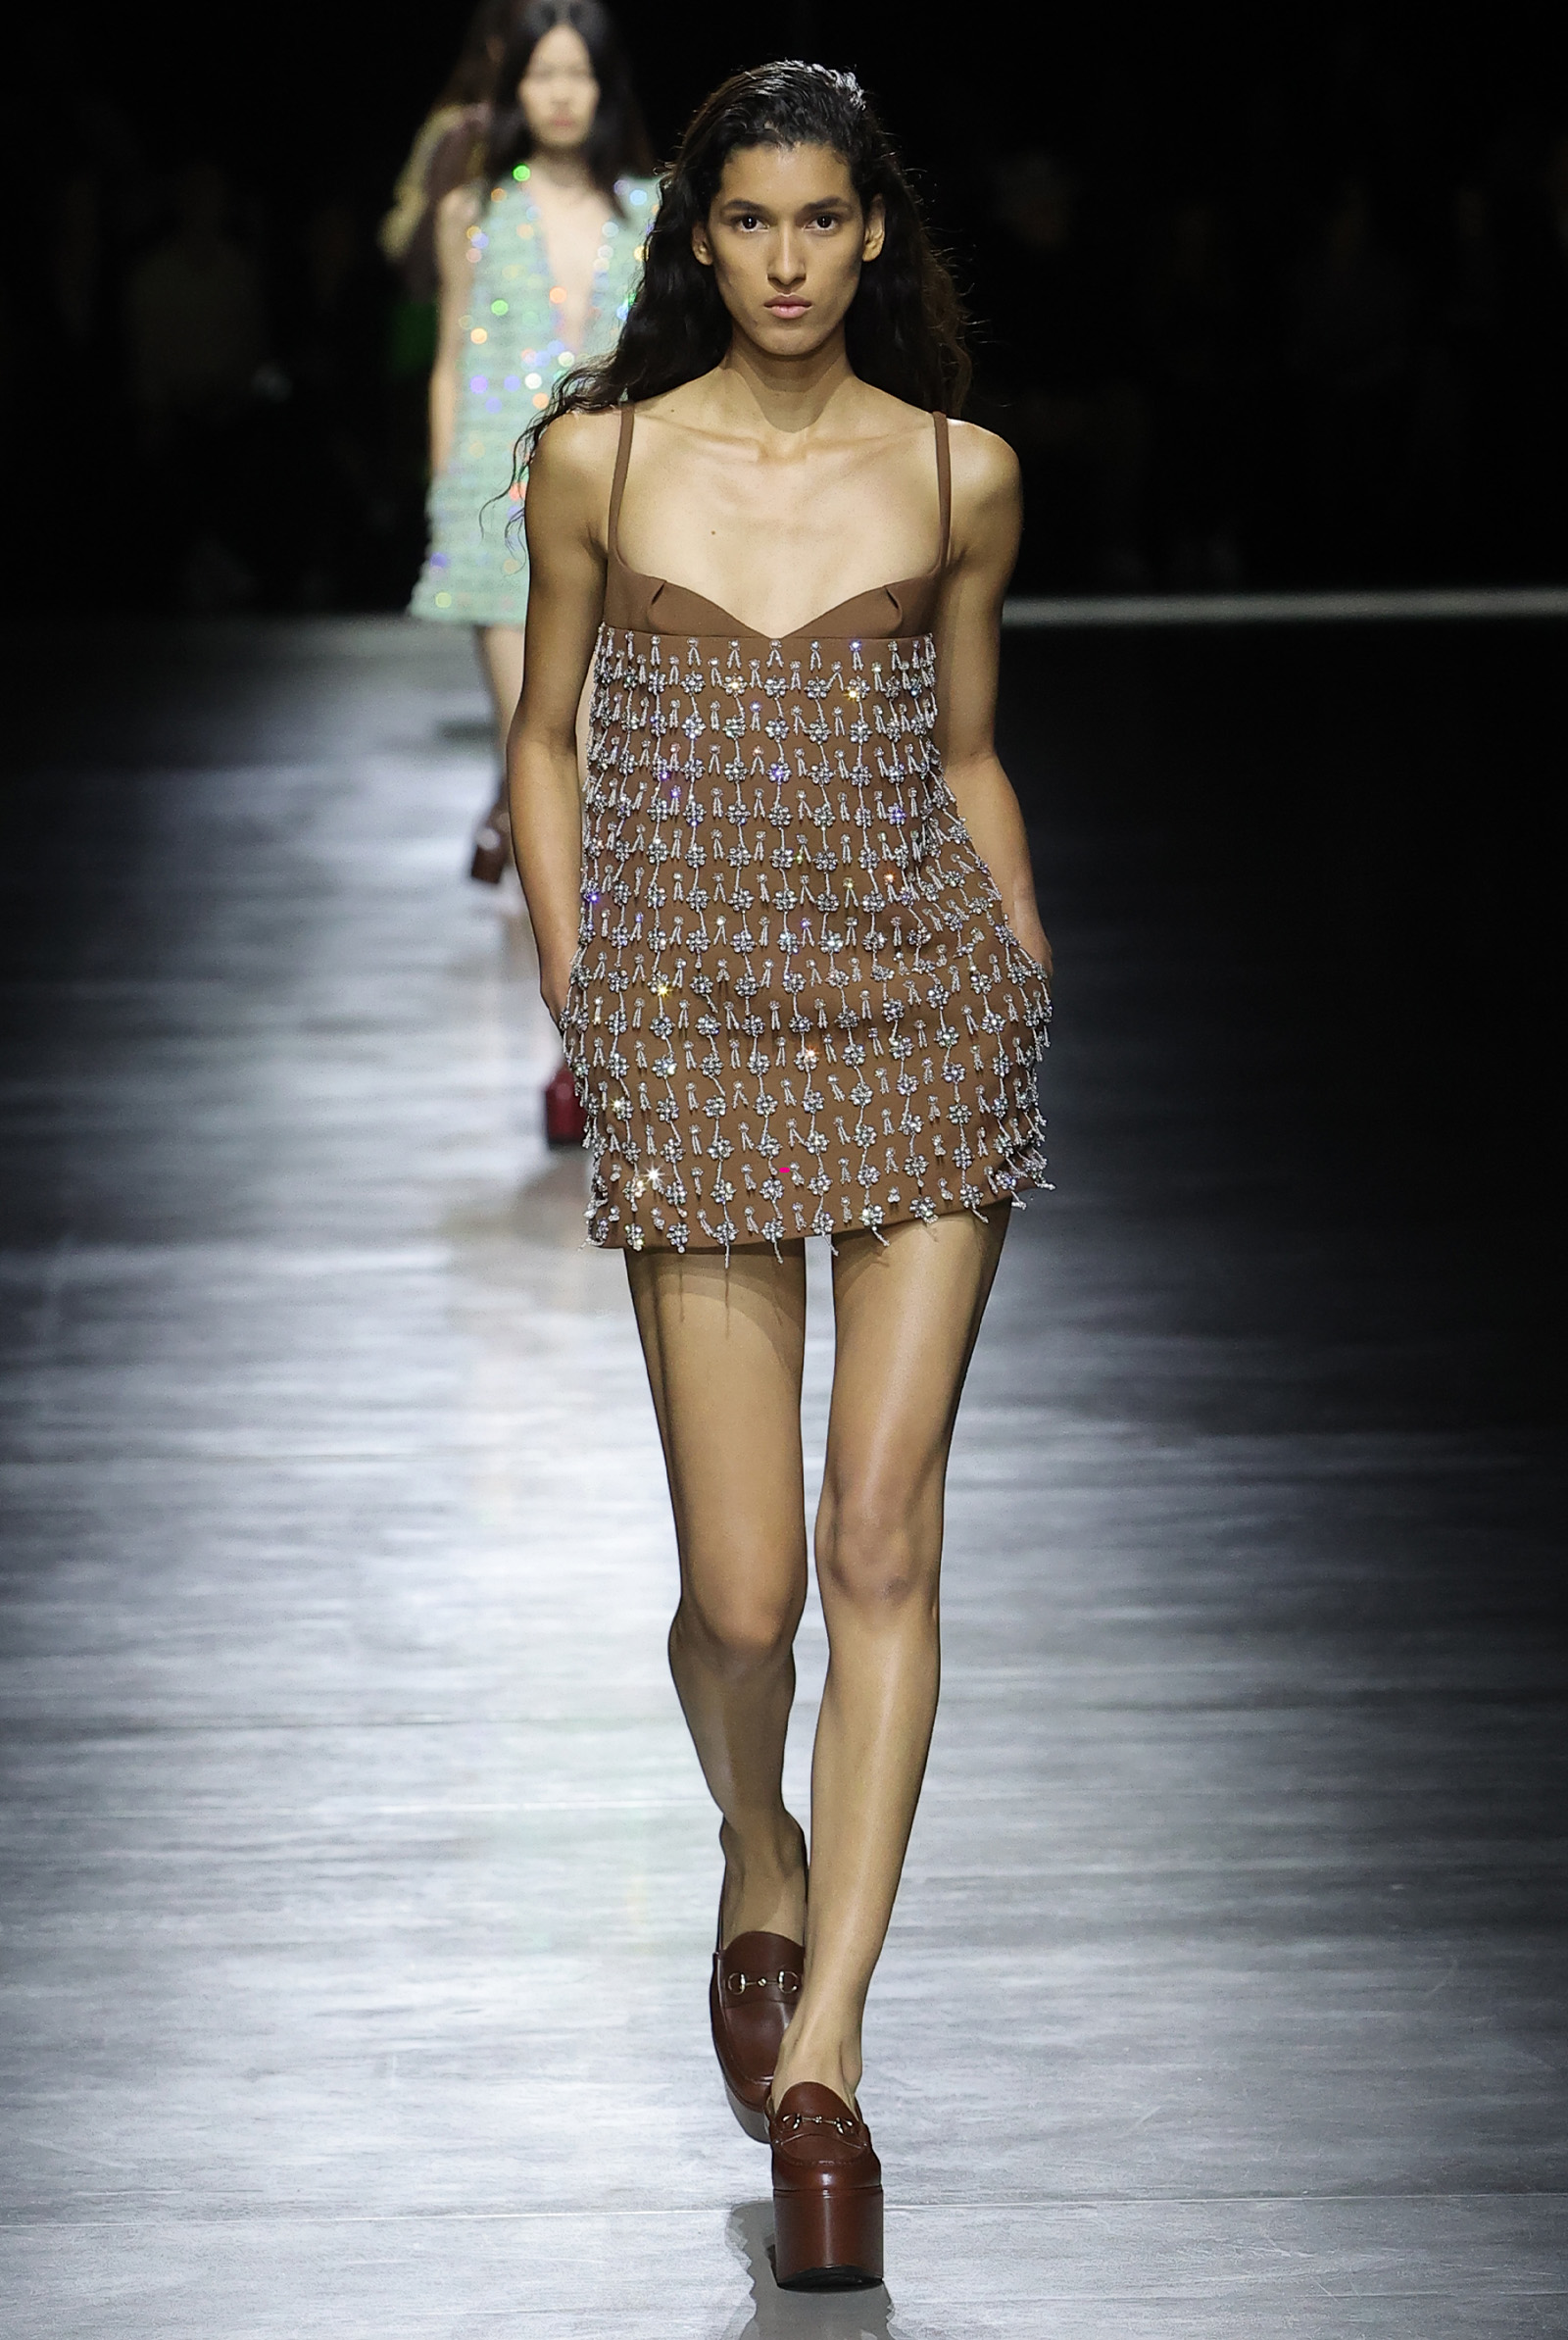 Sabato De Sarno's First Gucci Fashion Show Sees Miniskirts